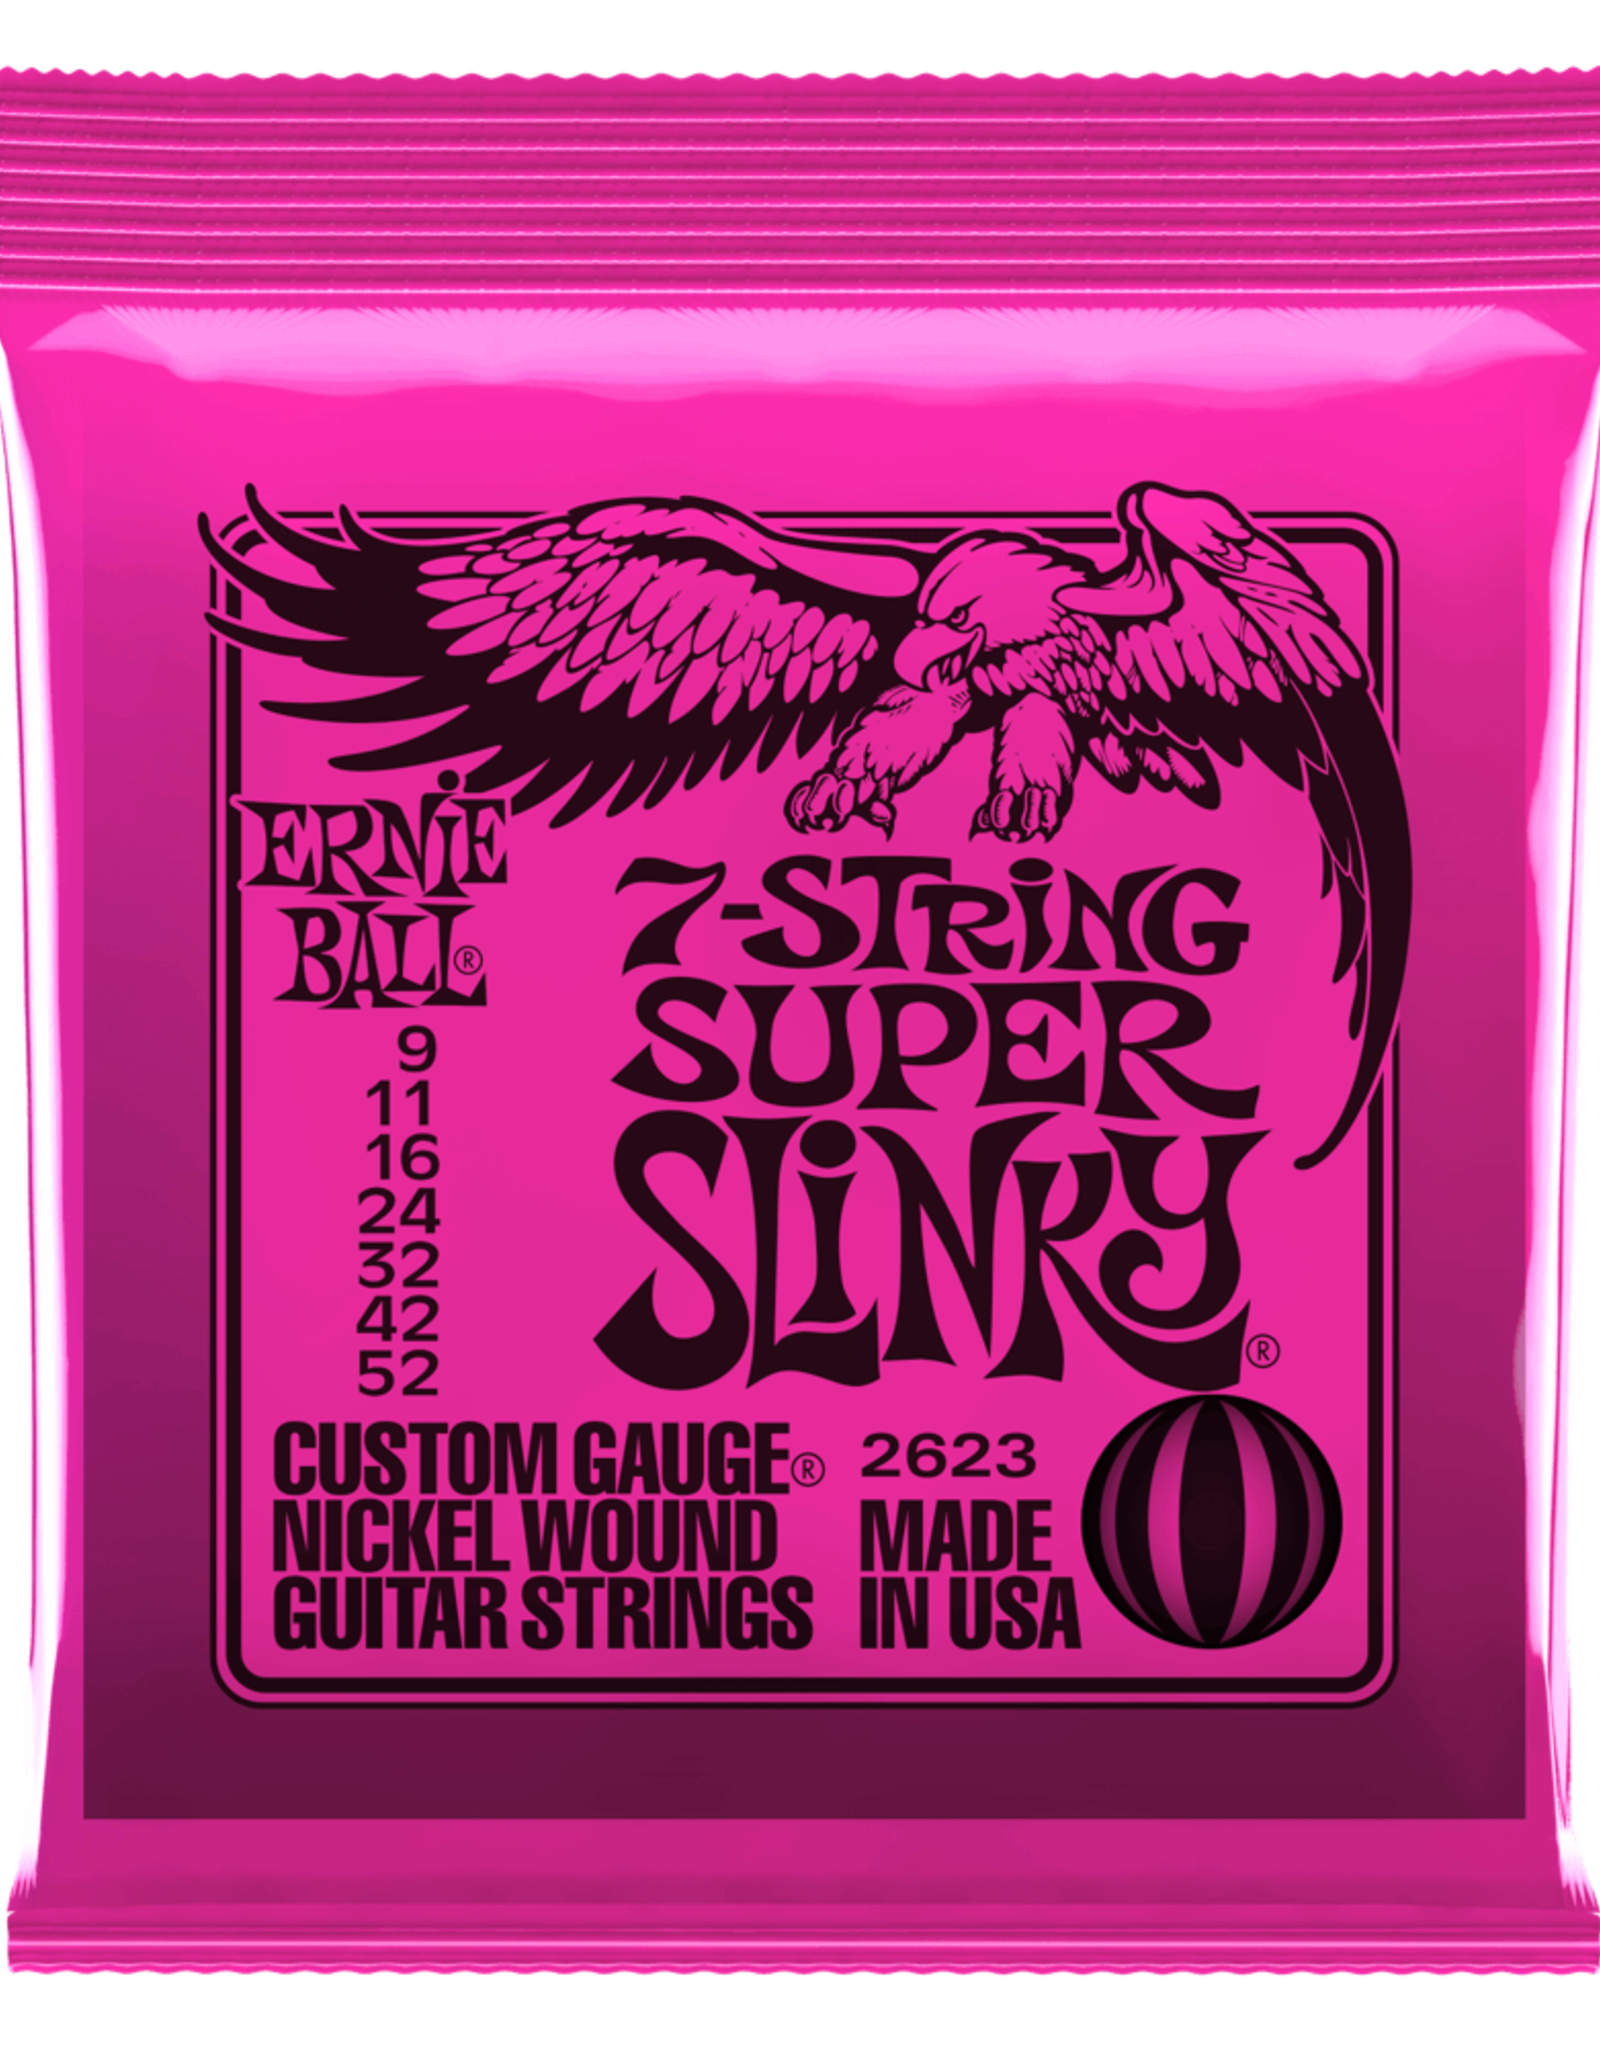 Ernie Ball Ernie Ball 2623 Super Slinky 7-String Nickel Wound  9-52 Gauge